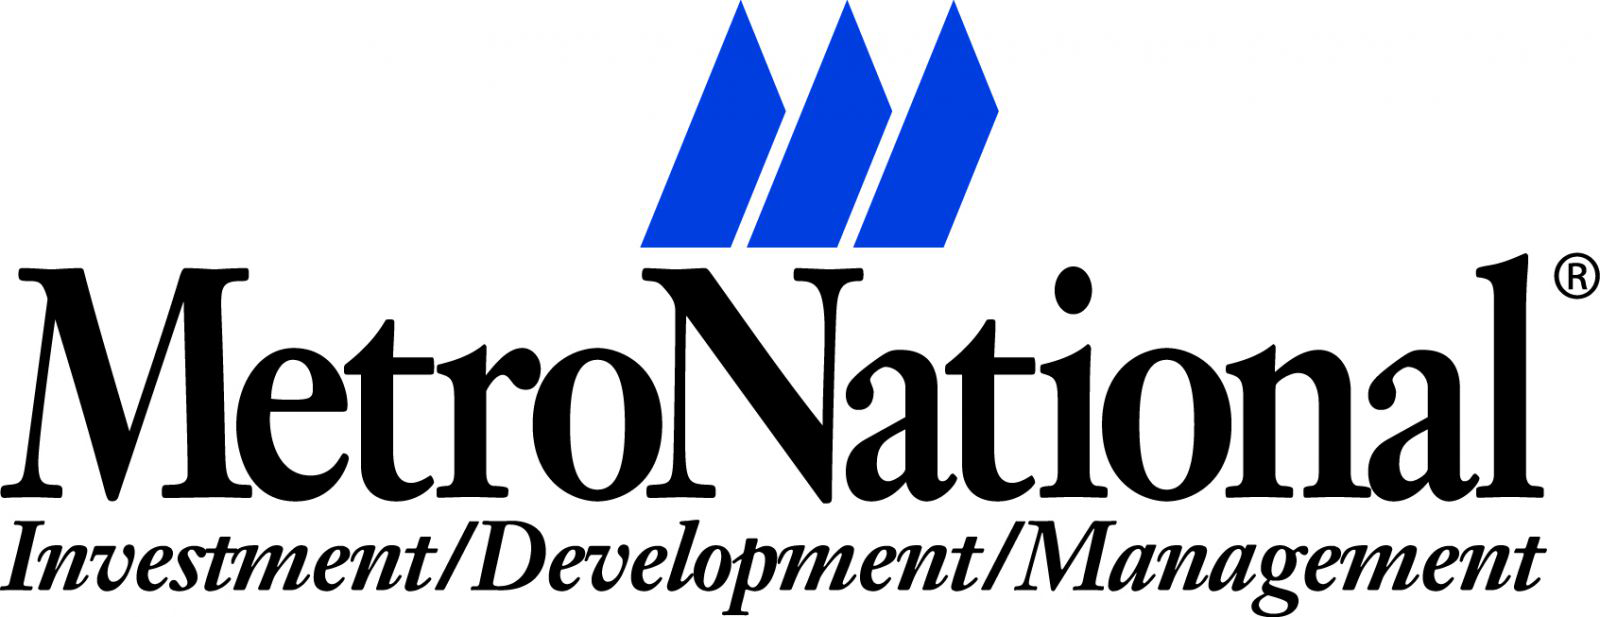 MetroNational logo